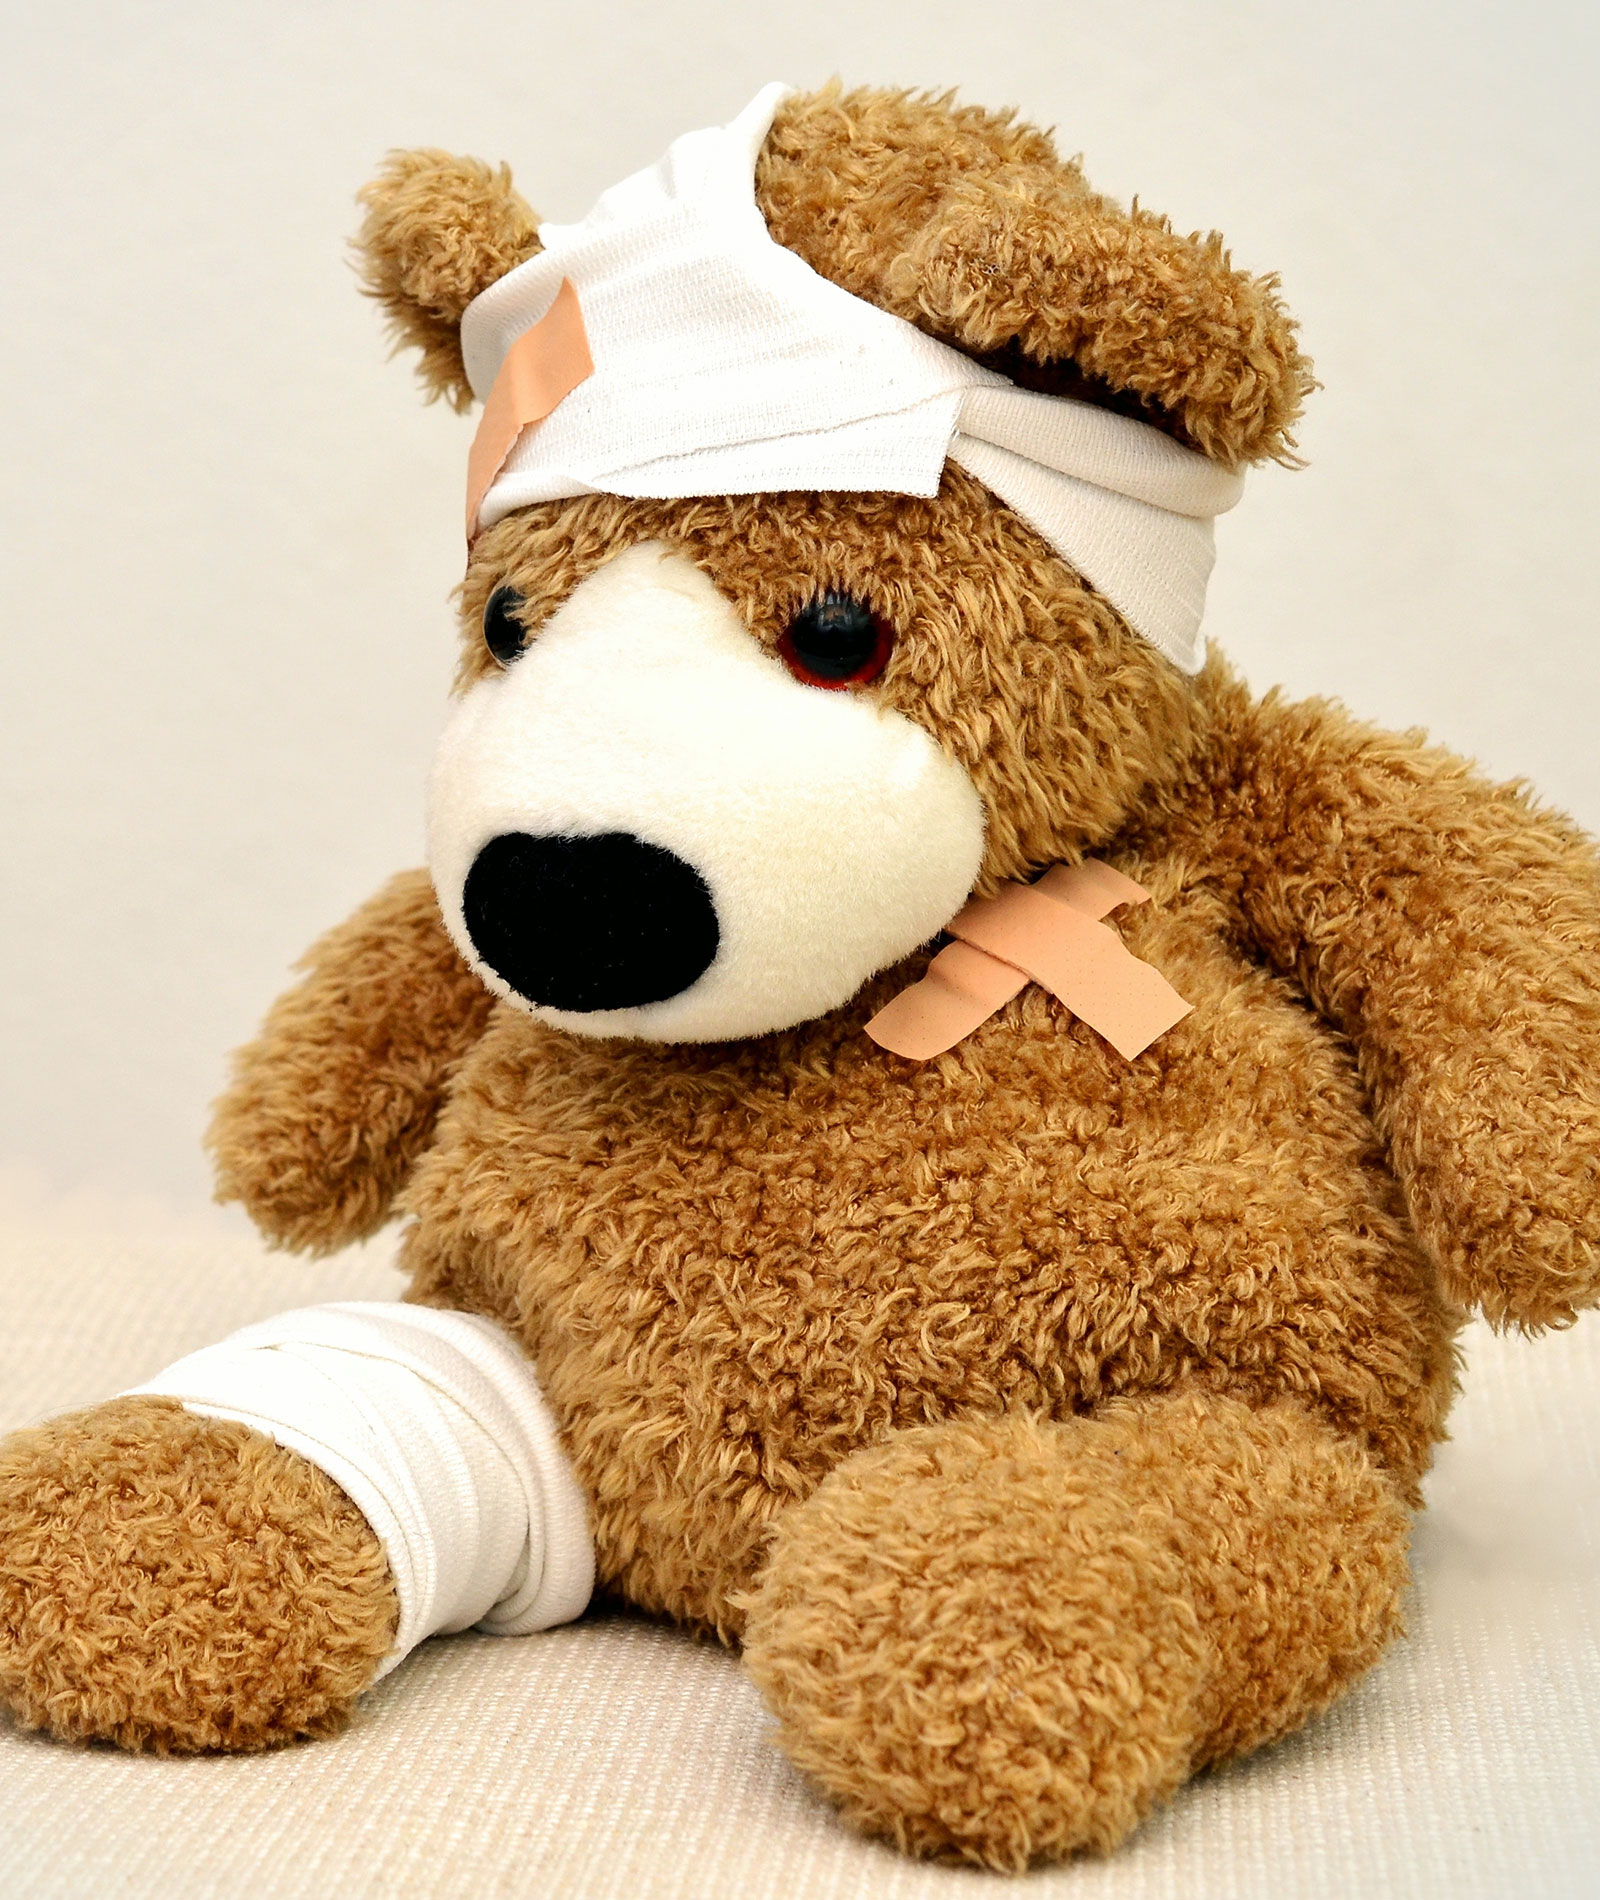 accident band aid bandages 42230